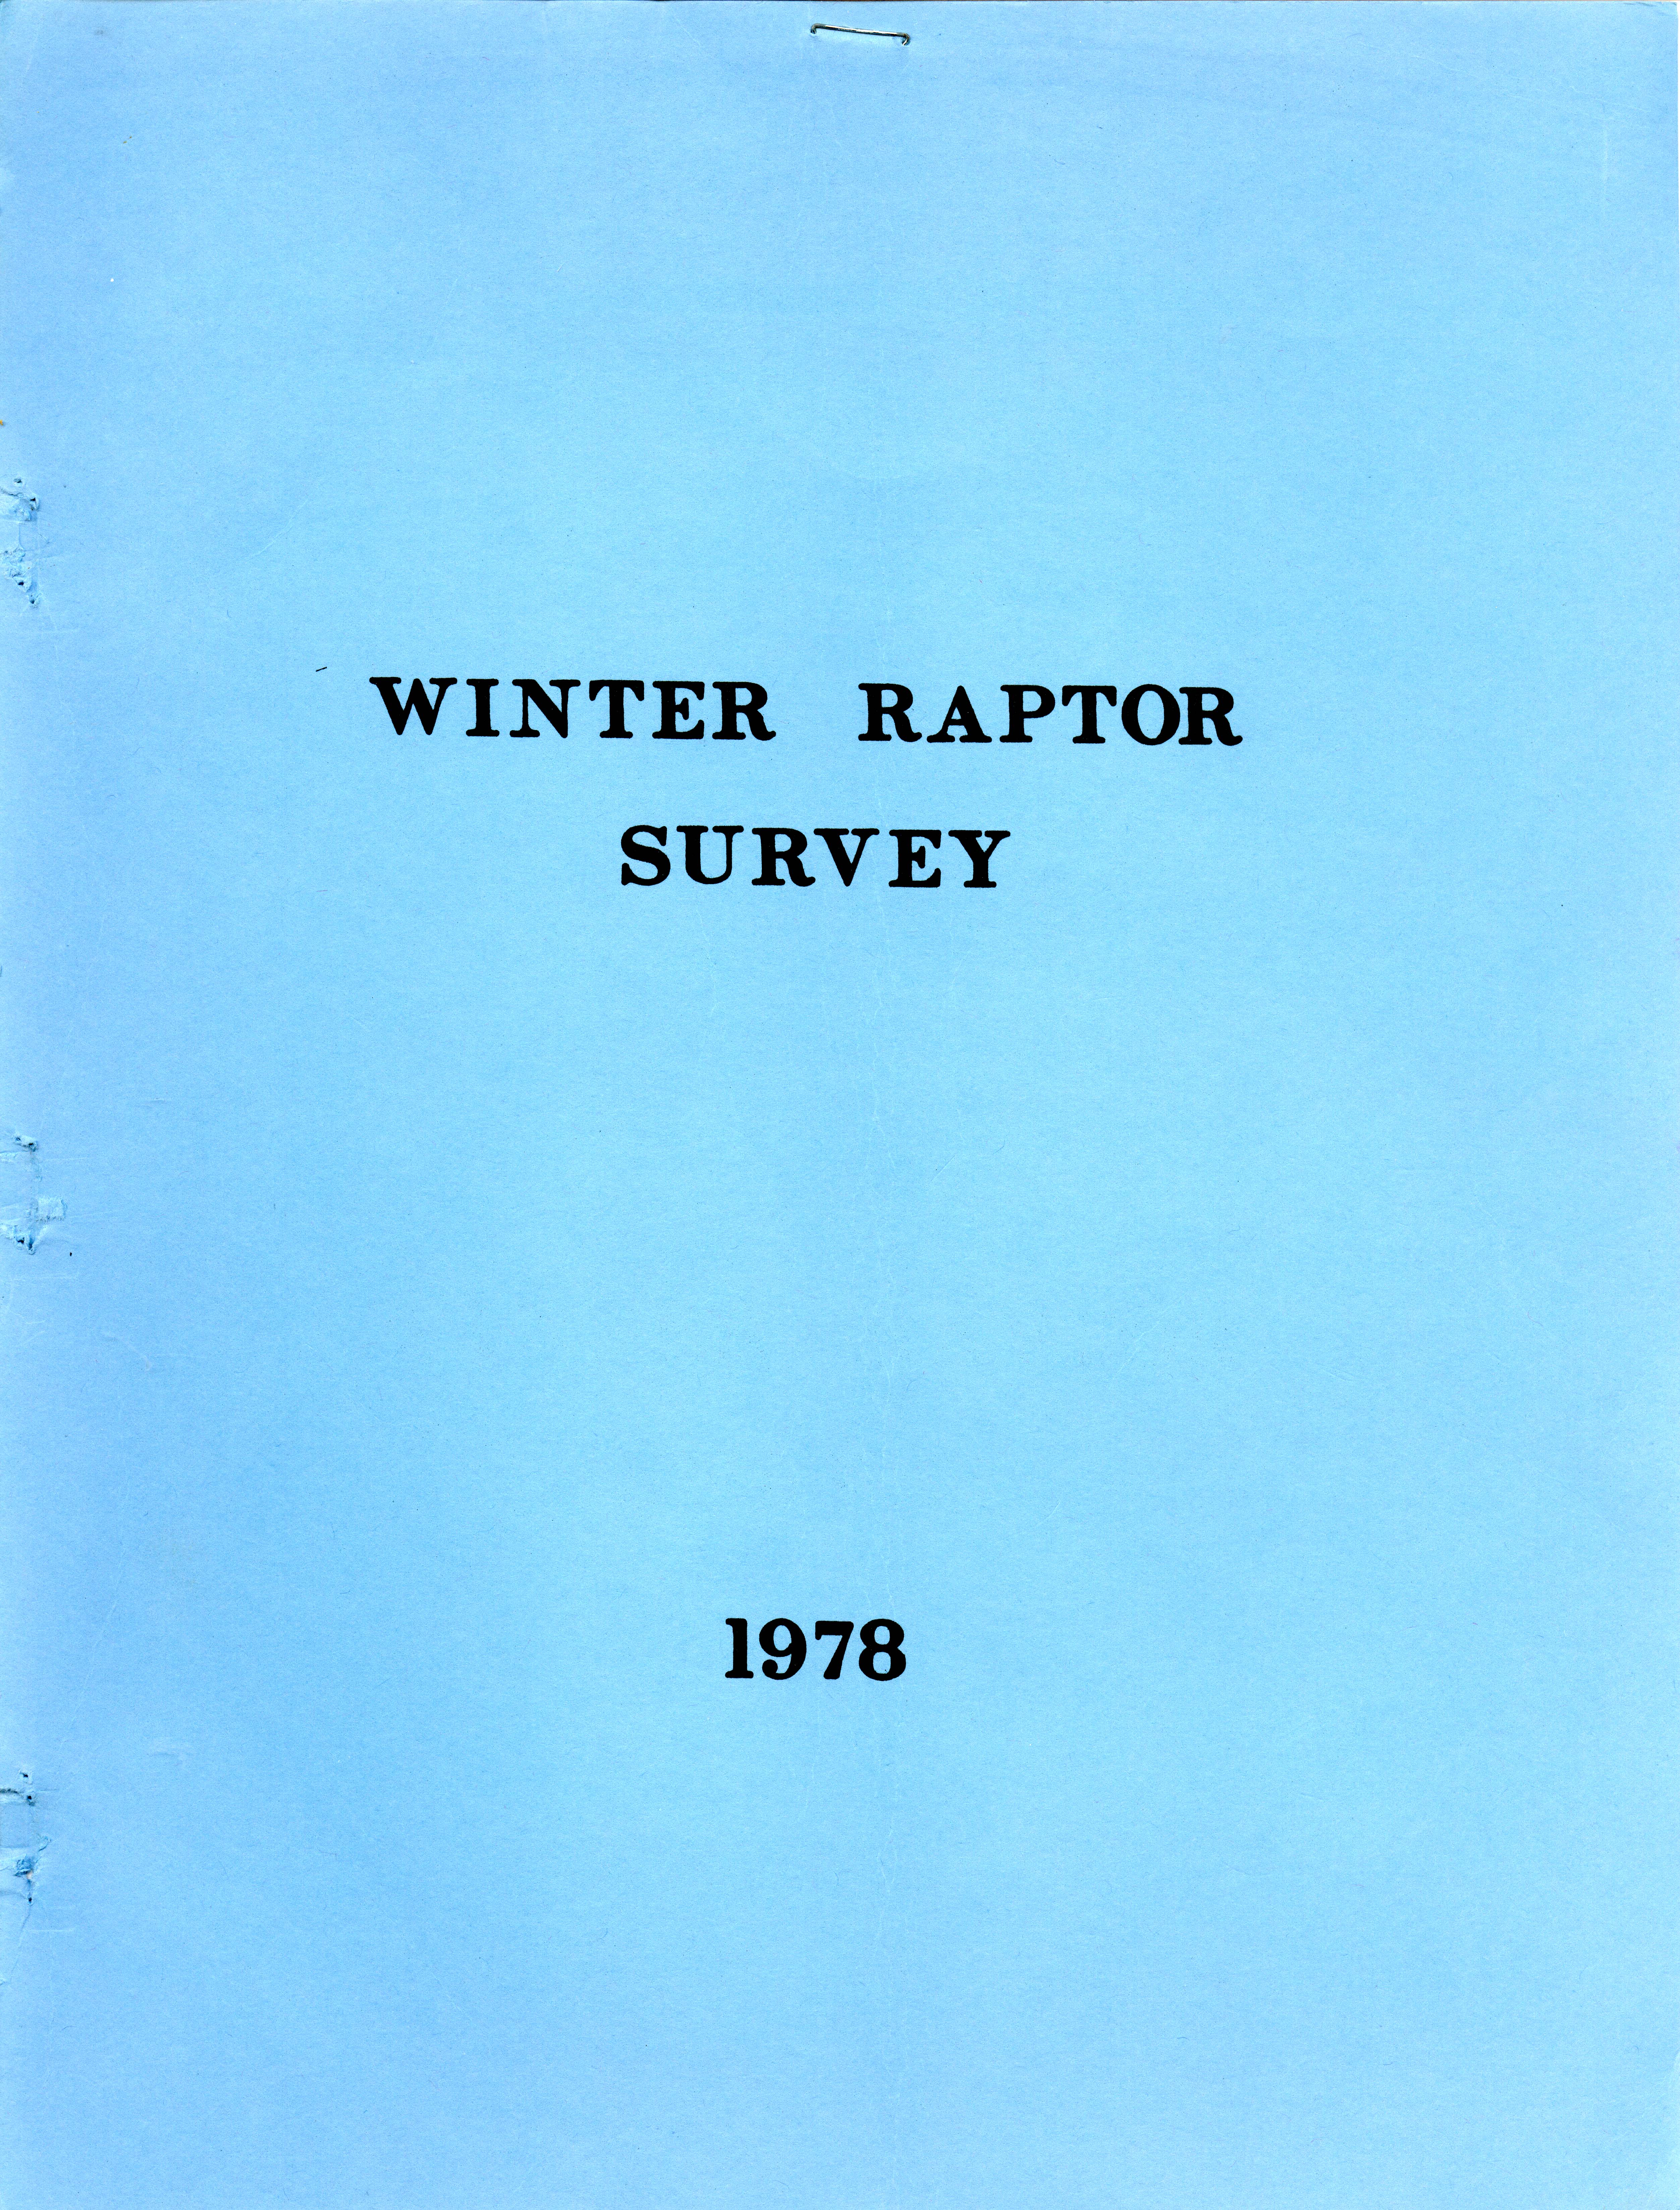 Winter raptor survey, 1978